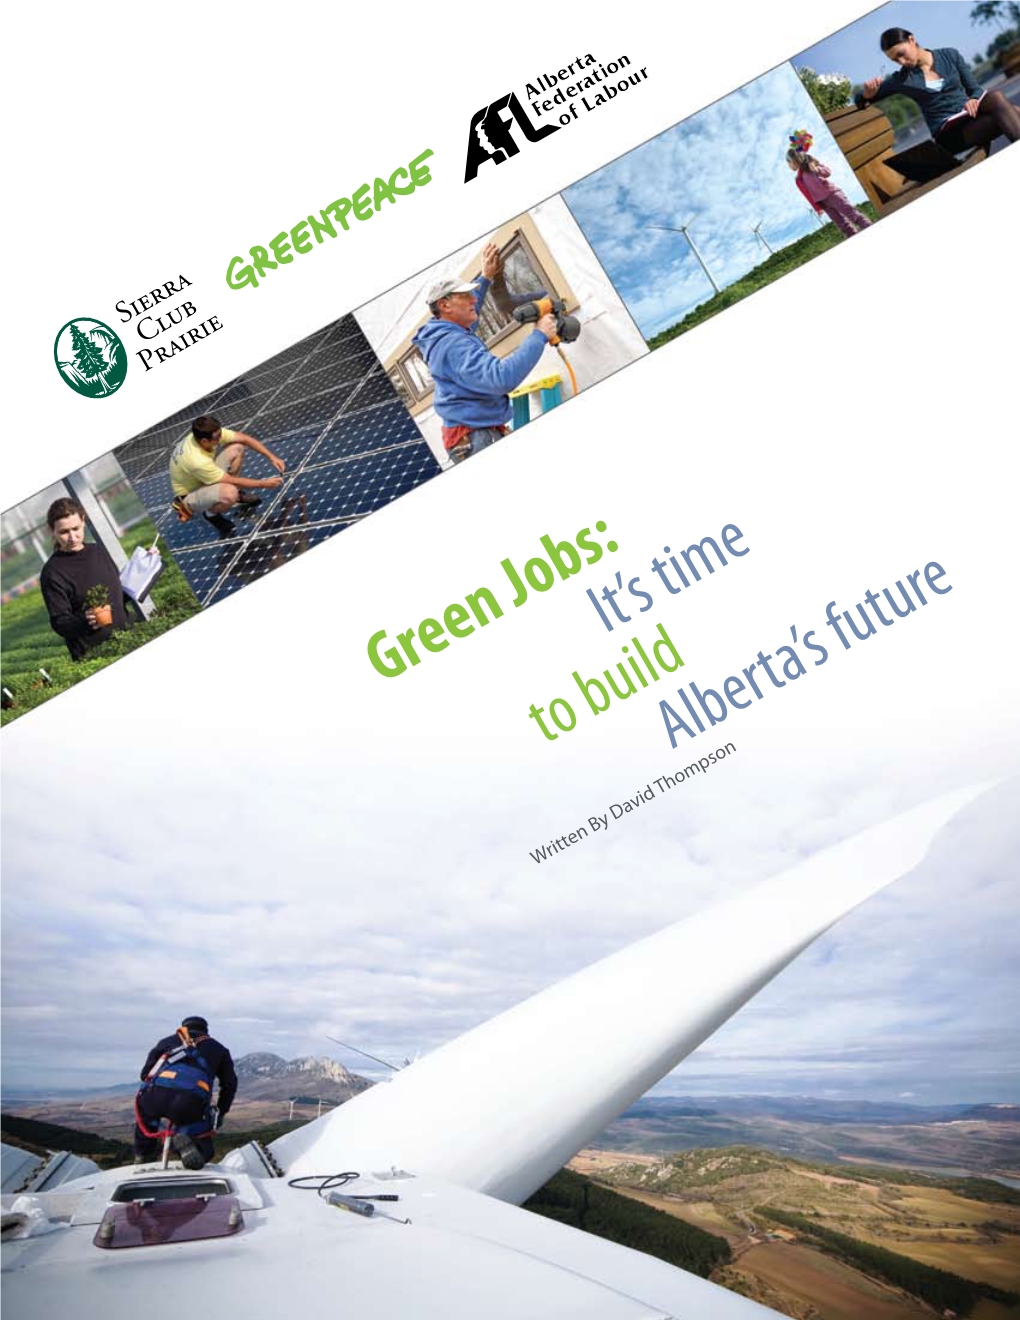 Green Jobs: to Build It's Time Alberta's Future